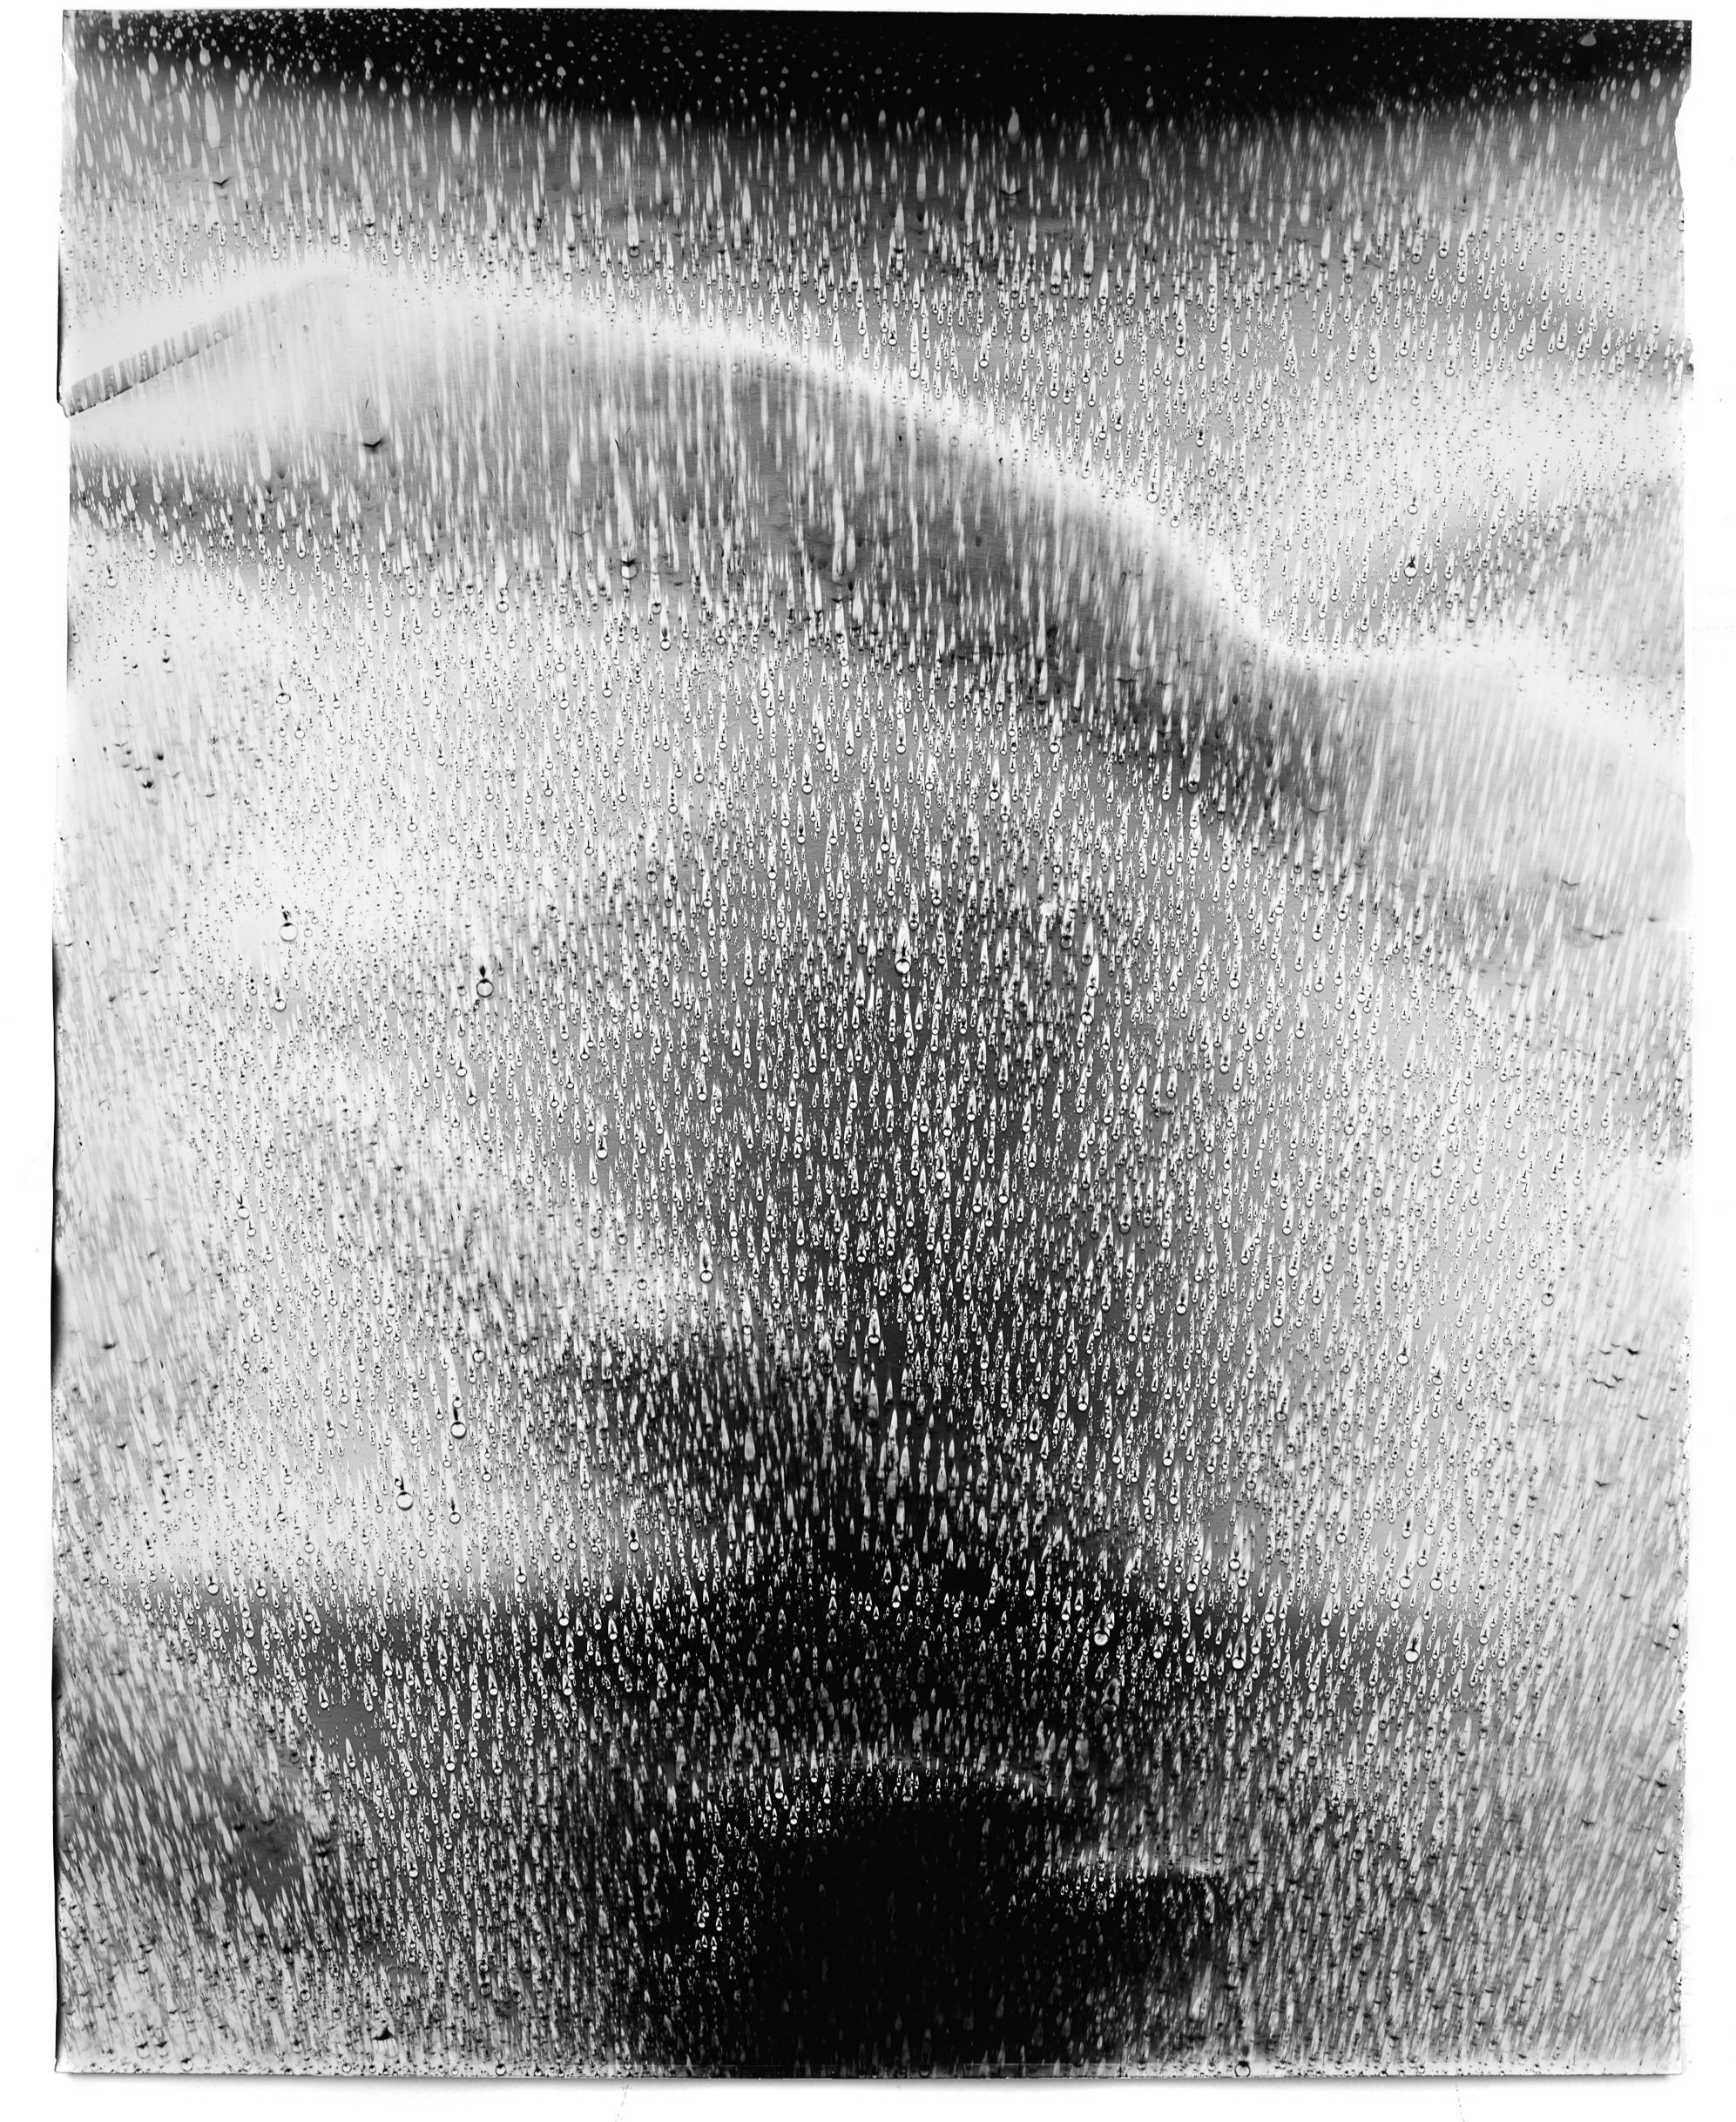   Rainstorm 6,  2014 Silver gelatin photogram 42 x 34 in 